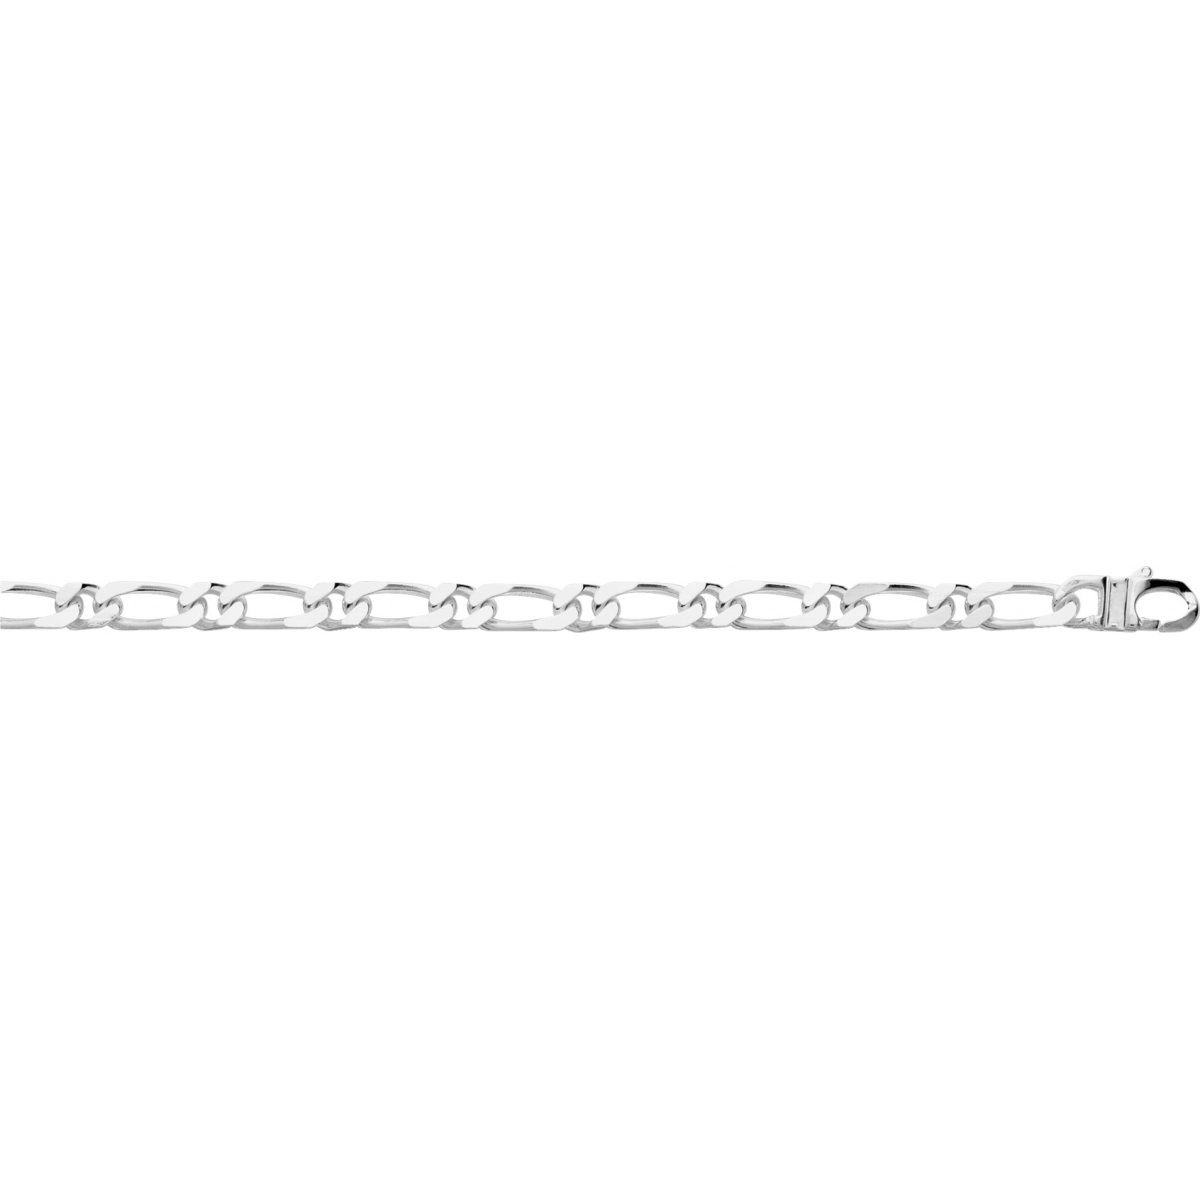 Necklace 6mm rh925 Silver - Size: 60  Lua Blanca  301268C.60